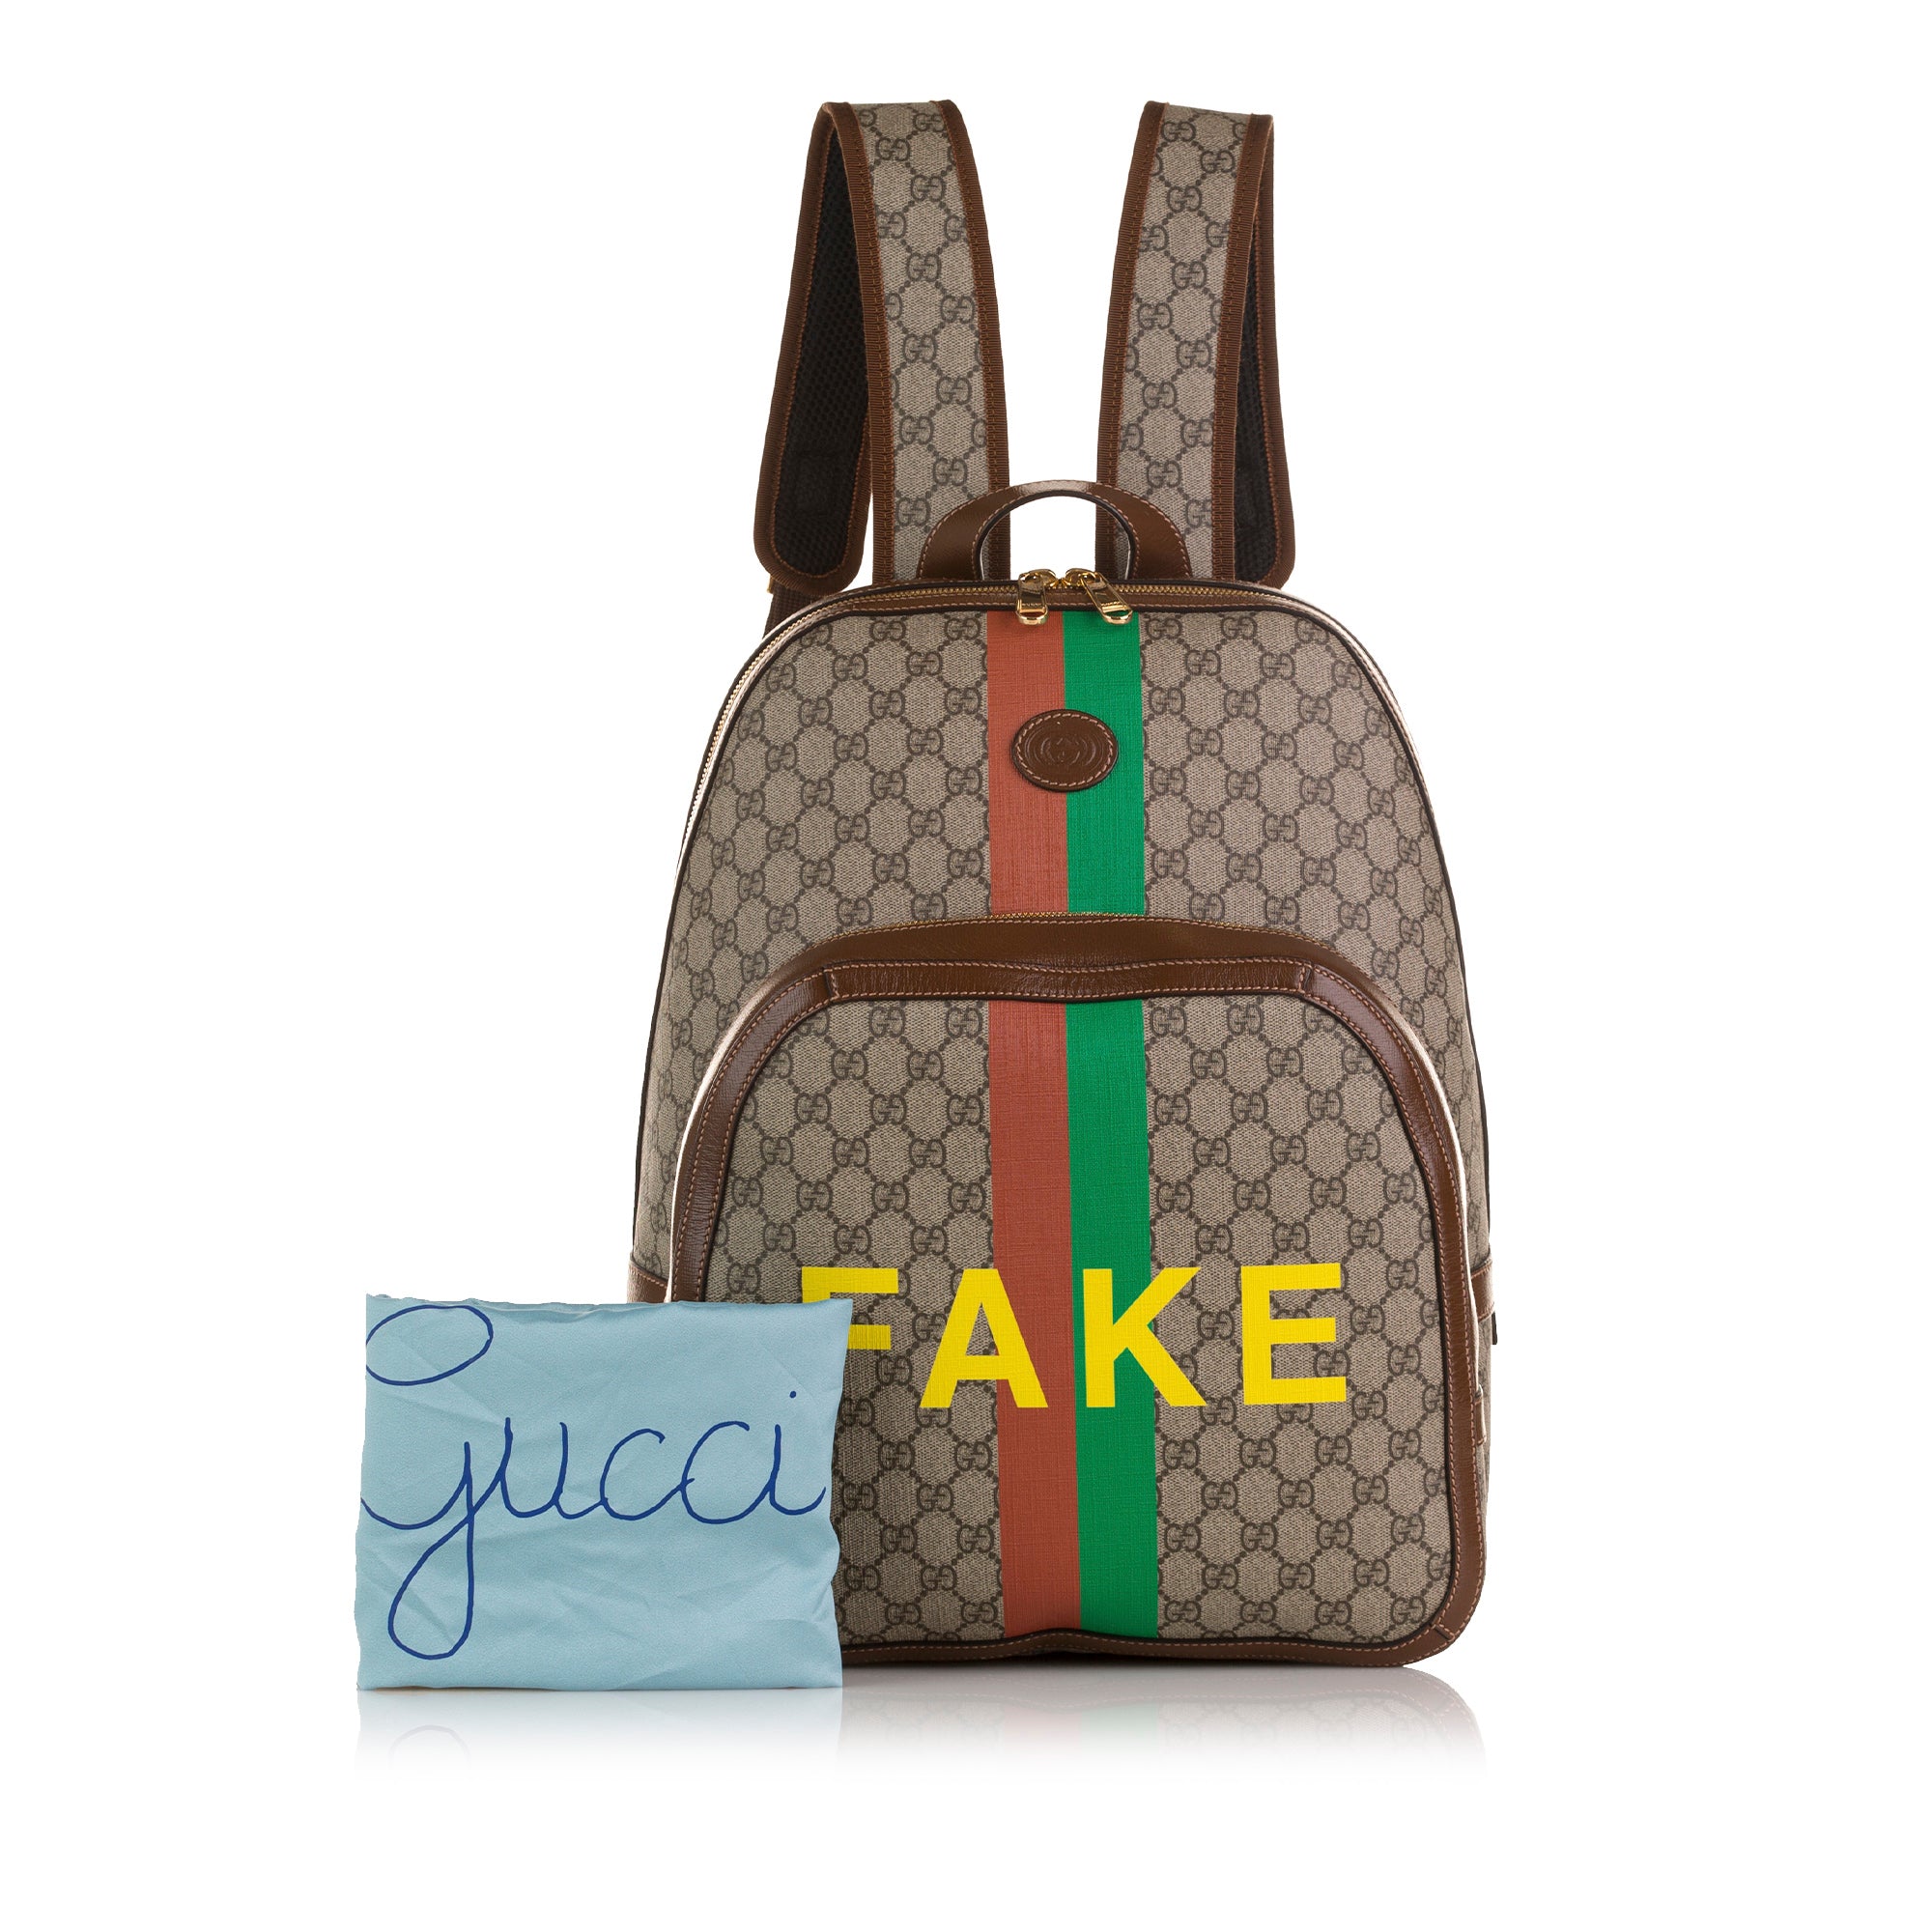 Gucci Bag - NYC fashion New York city  Gucci mini bag, Gucci bag, Gucci bag  outfit